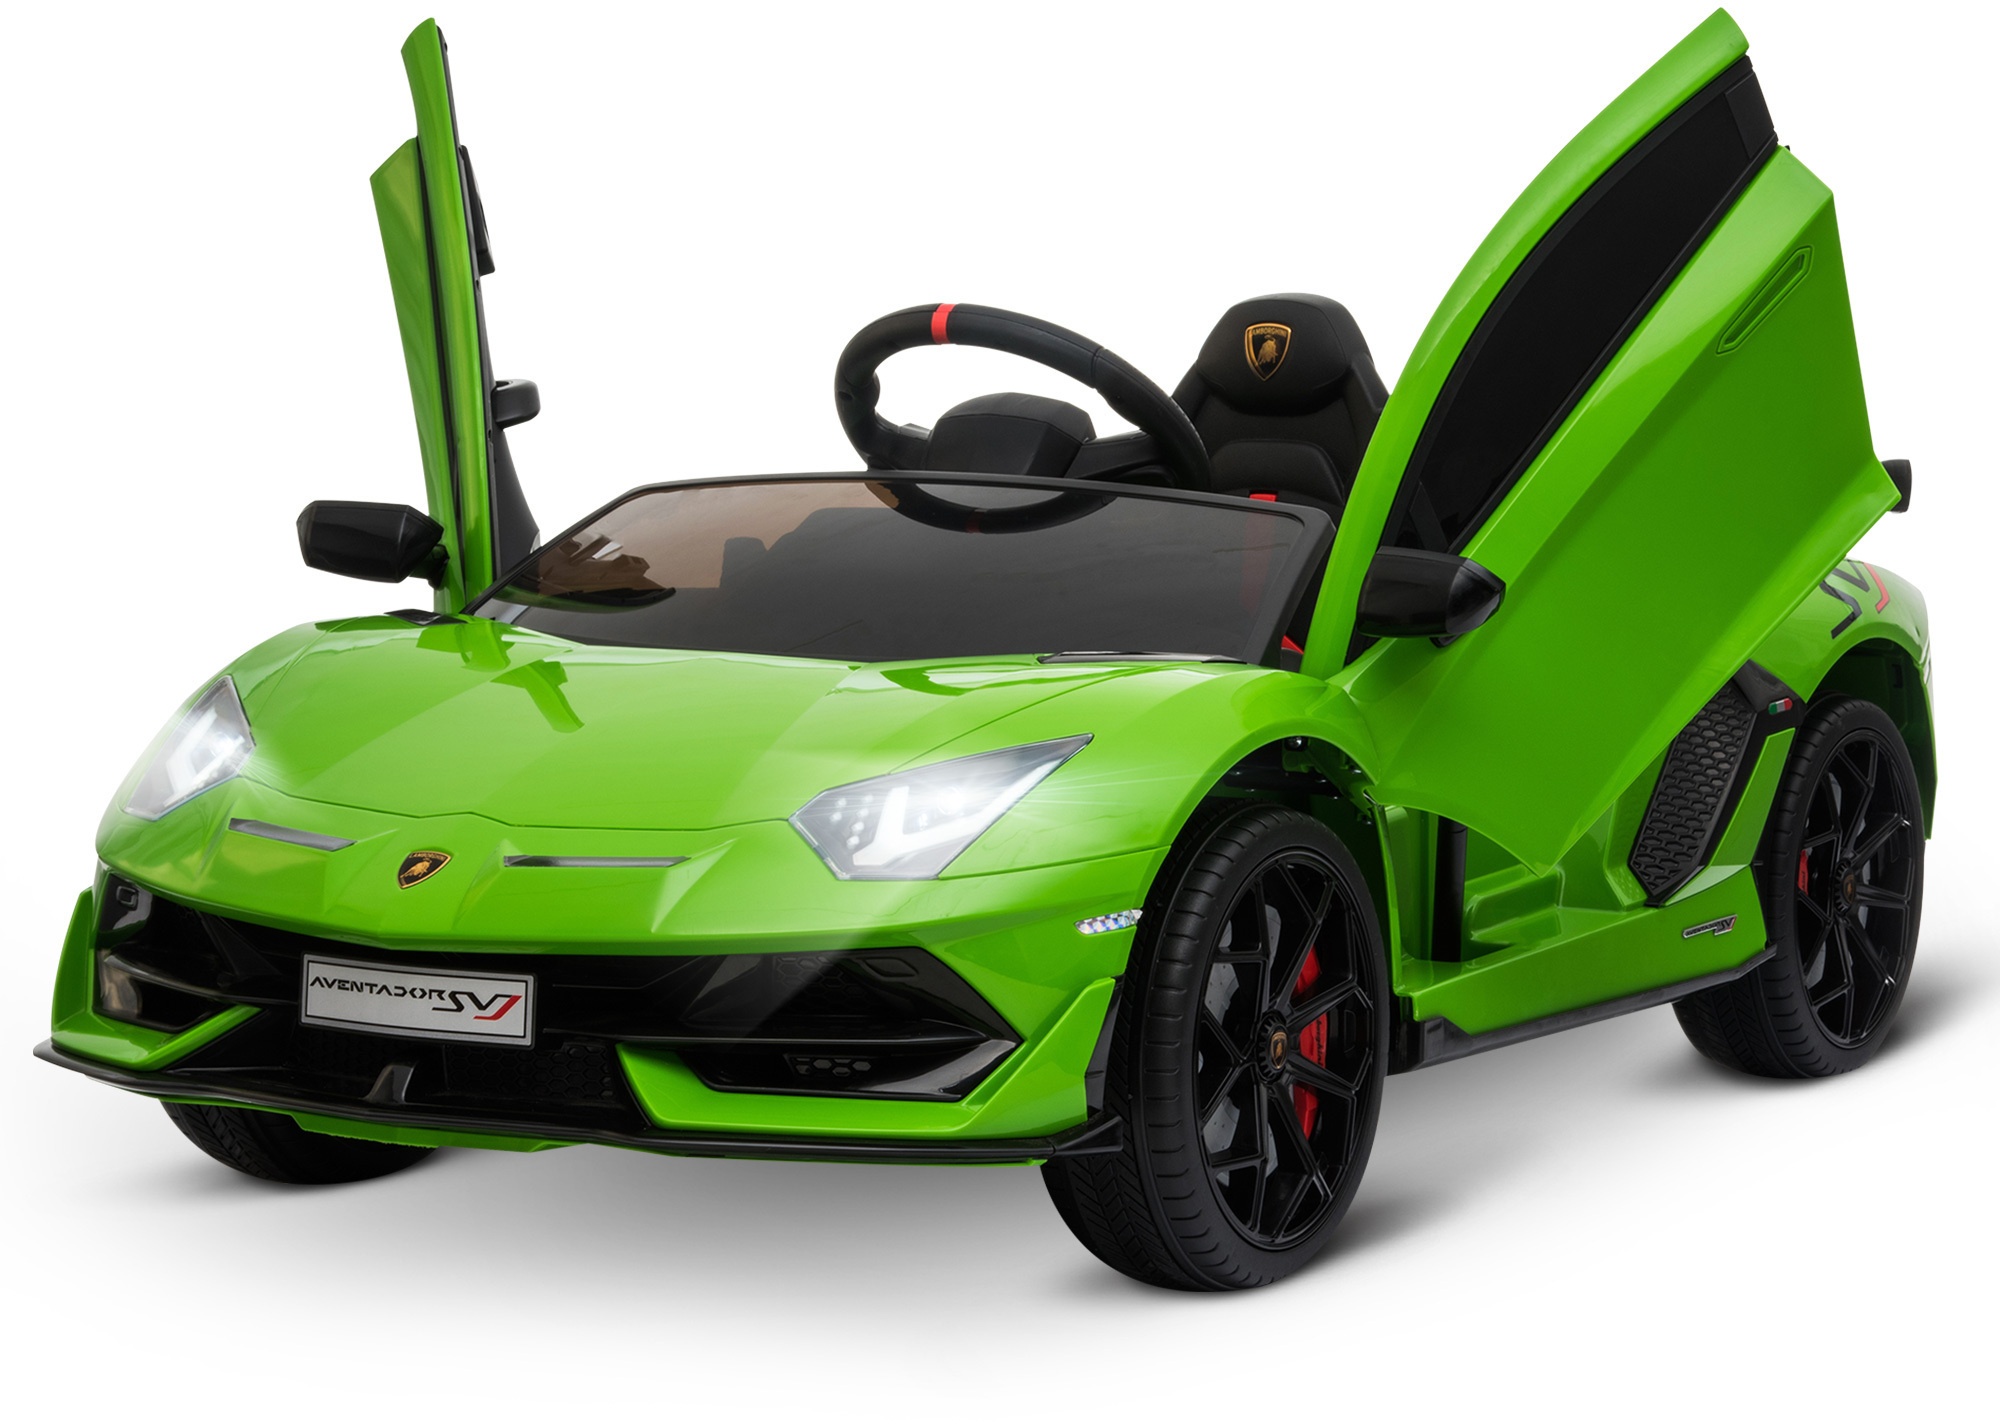 Kinderauto Lamborghini Elektrisch (Farbe: Grün)